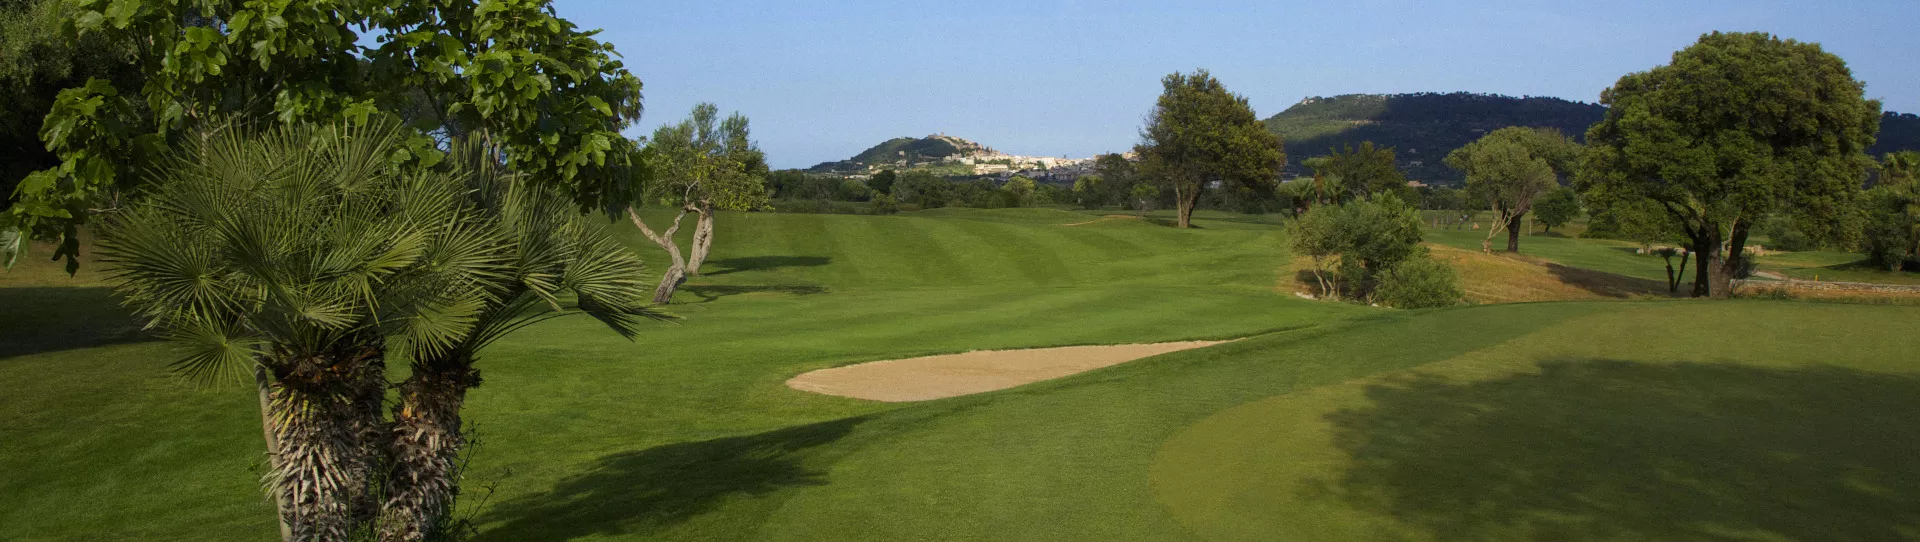 Spain golf courses - Capdepera Golf Course - Photo 3